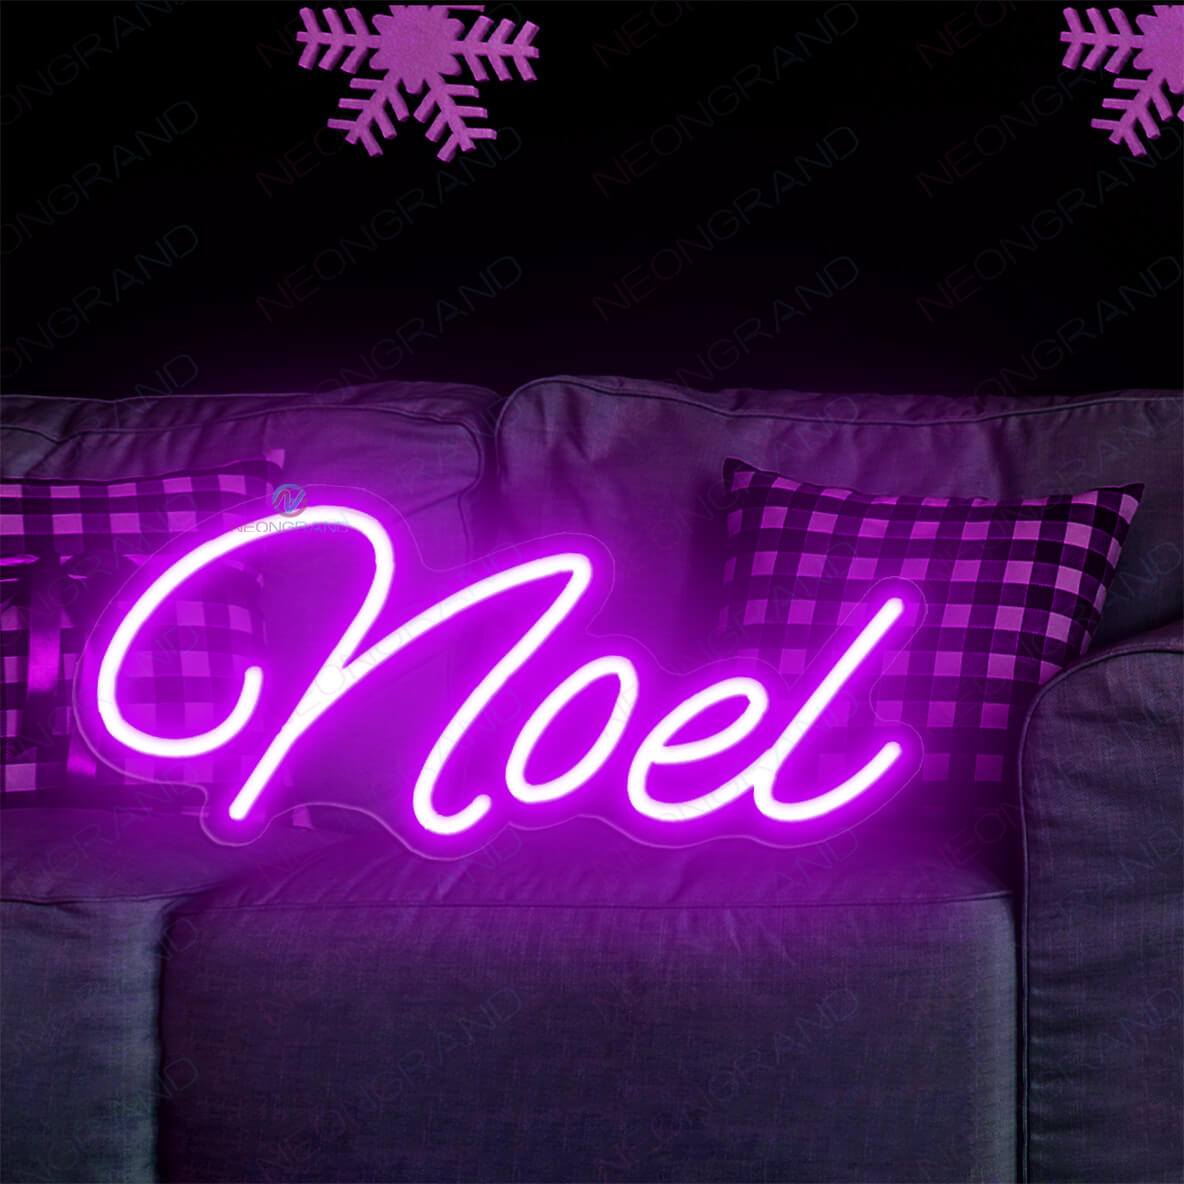 Christmas Neon Signs Noel Led Light Purple